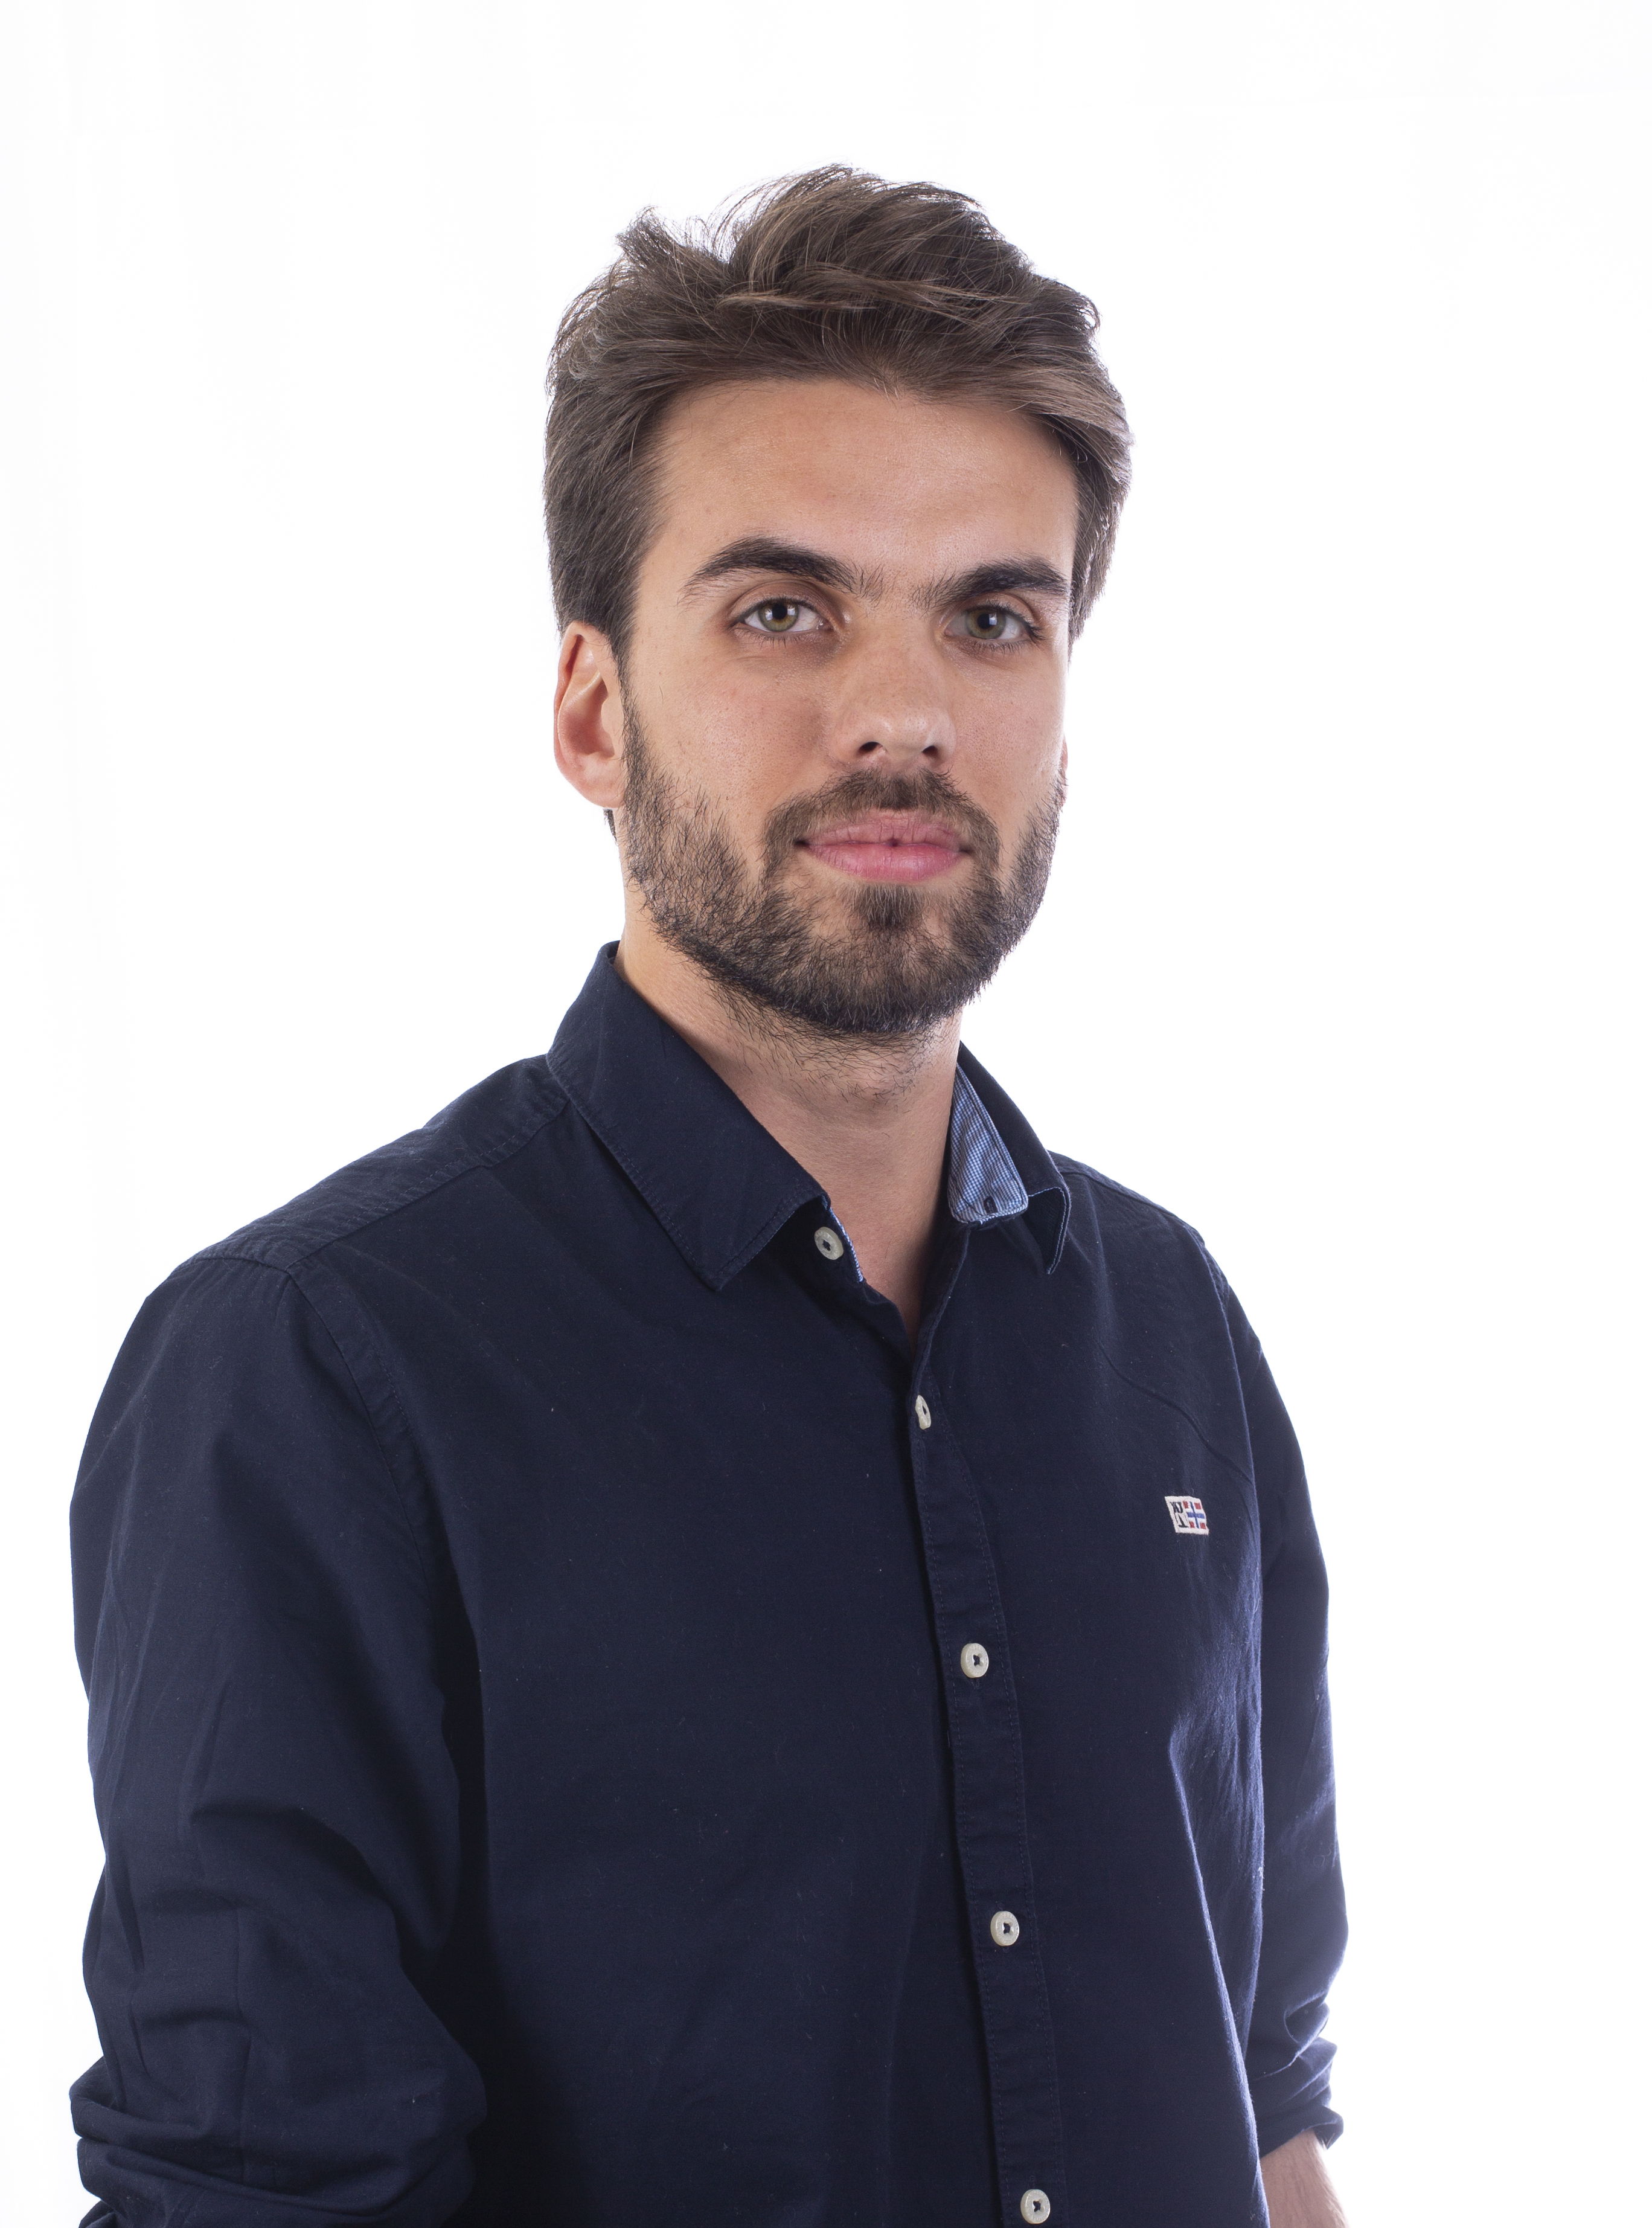 Florian Deleuil, Vice President of Product Management chez Netatmo